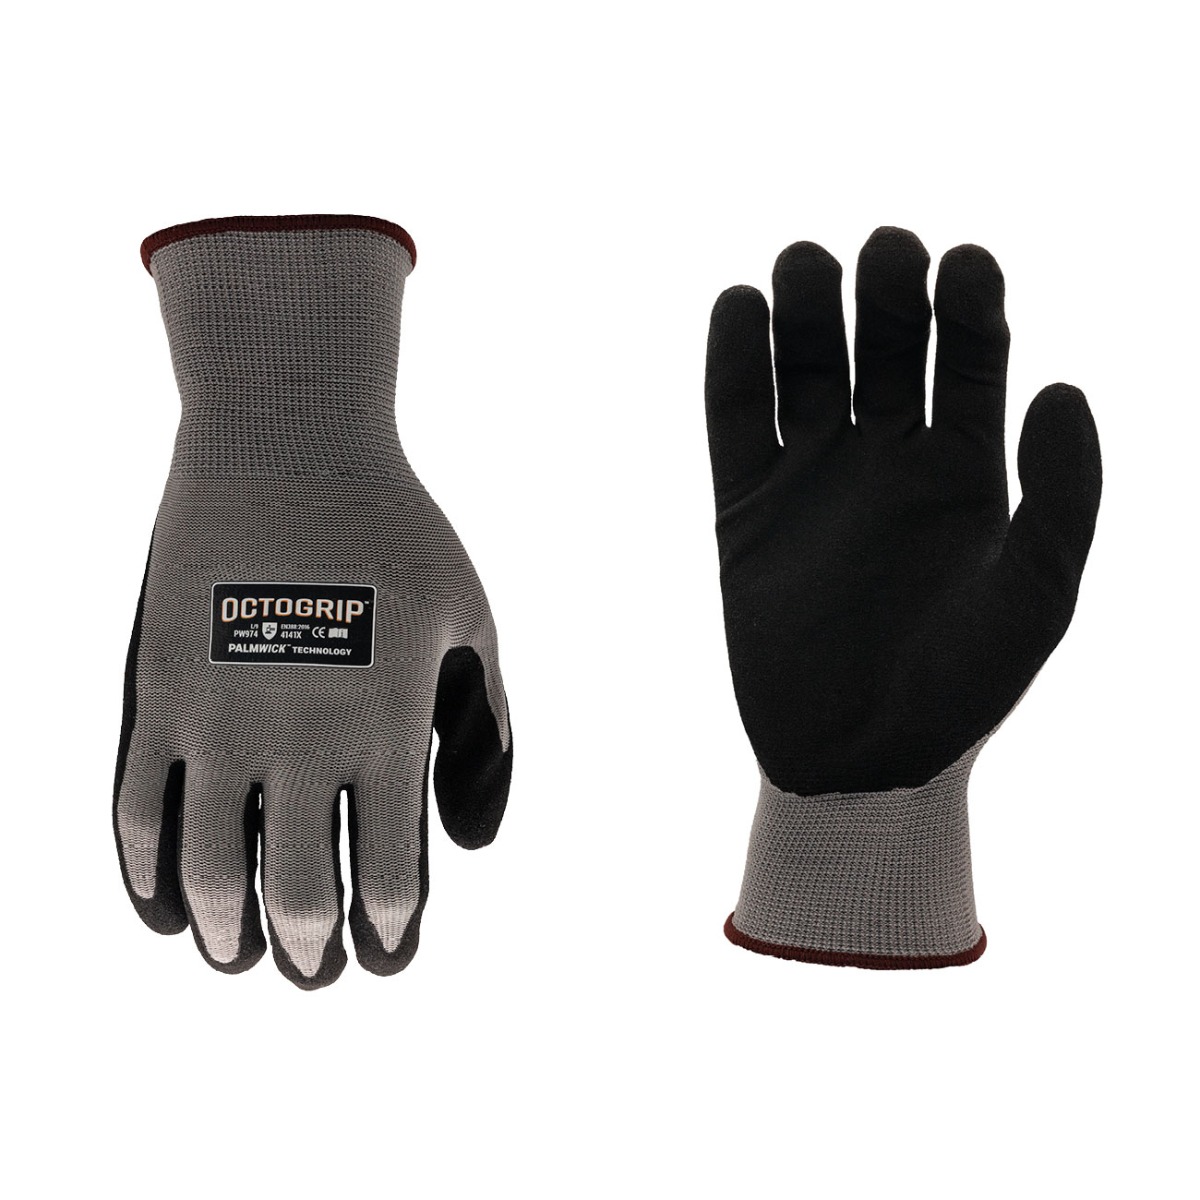 High Performance Manual Handling Glove 13g - Size M